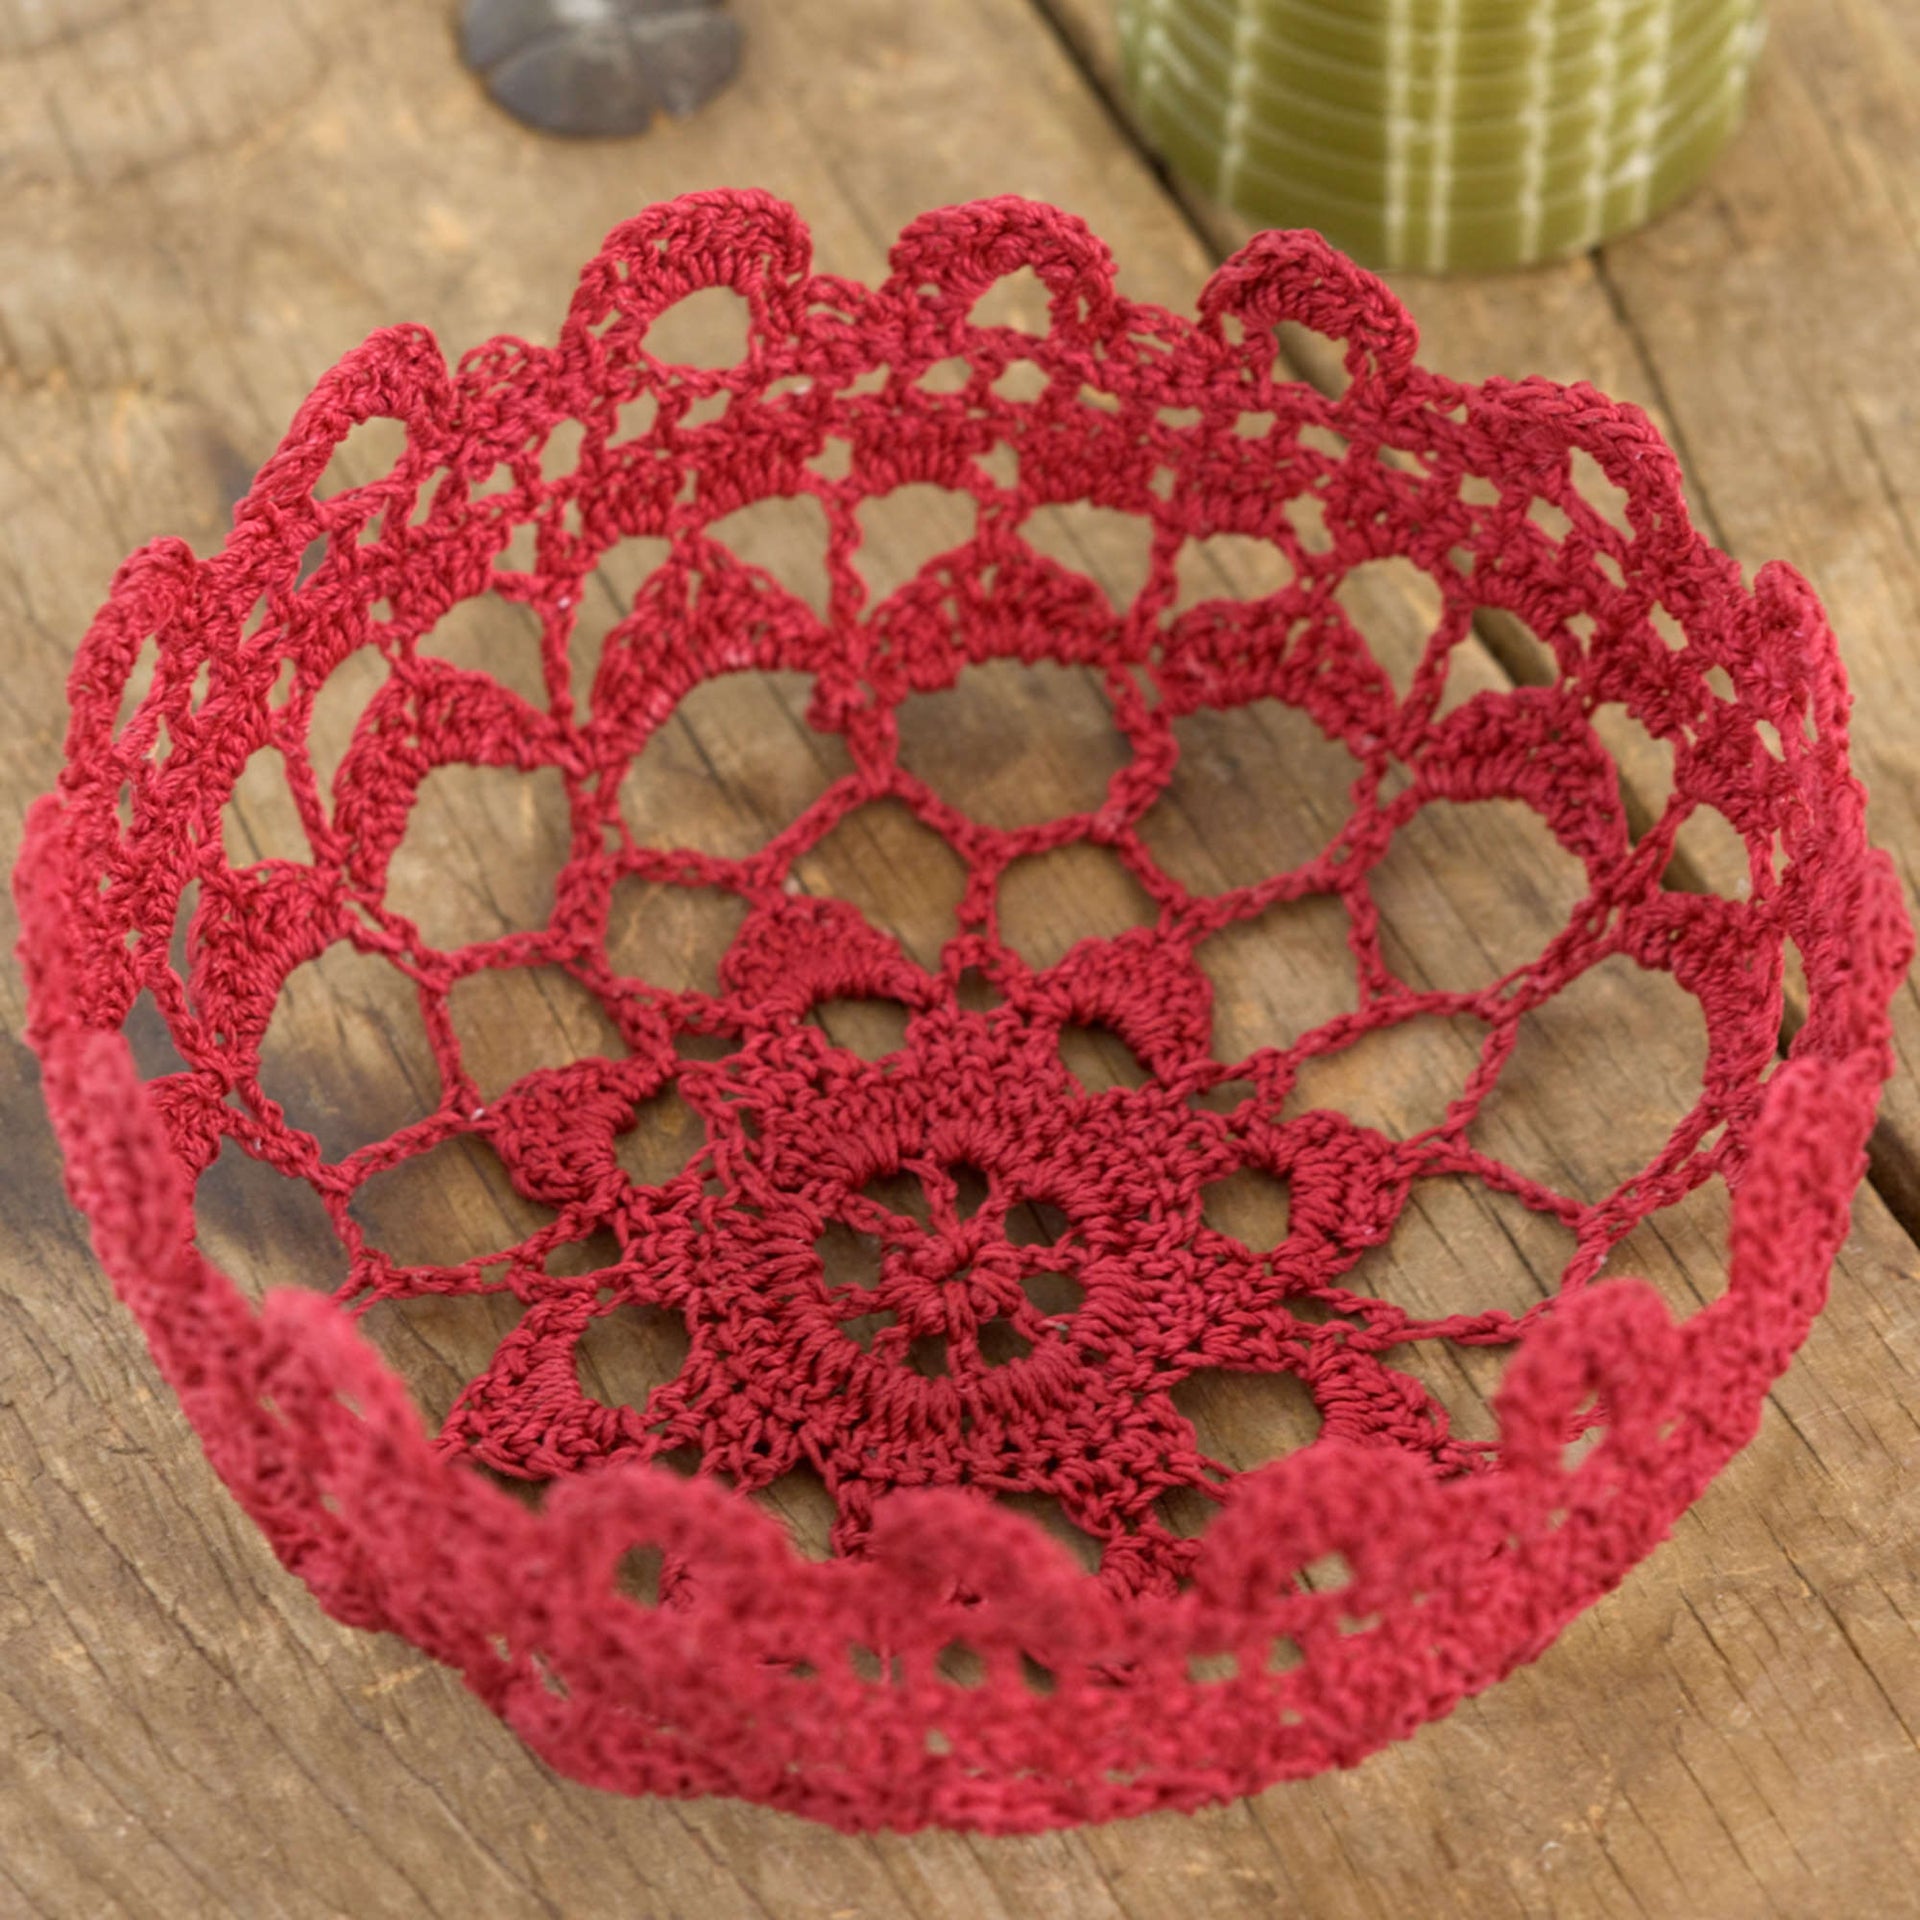 Large Cherry YARN Bowl for Knitting, Crochet, Functional